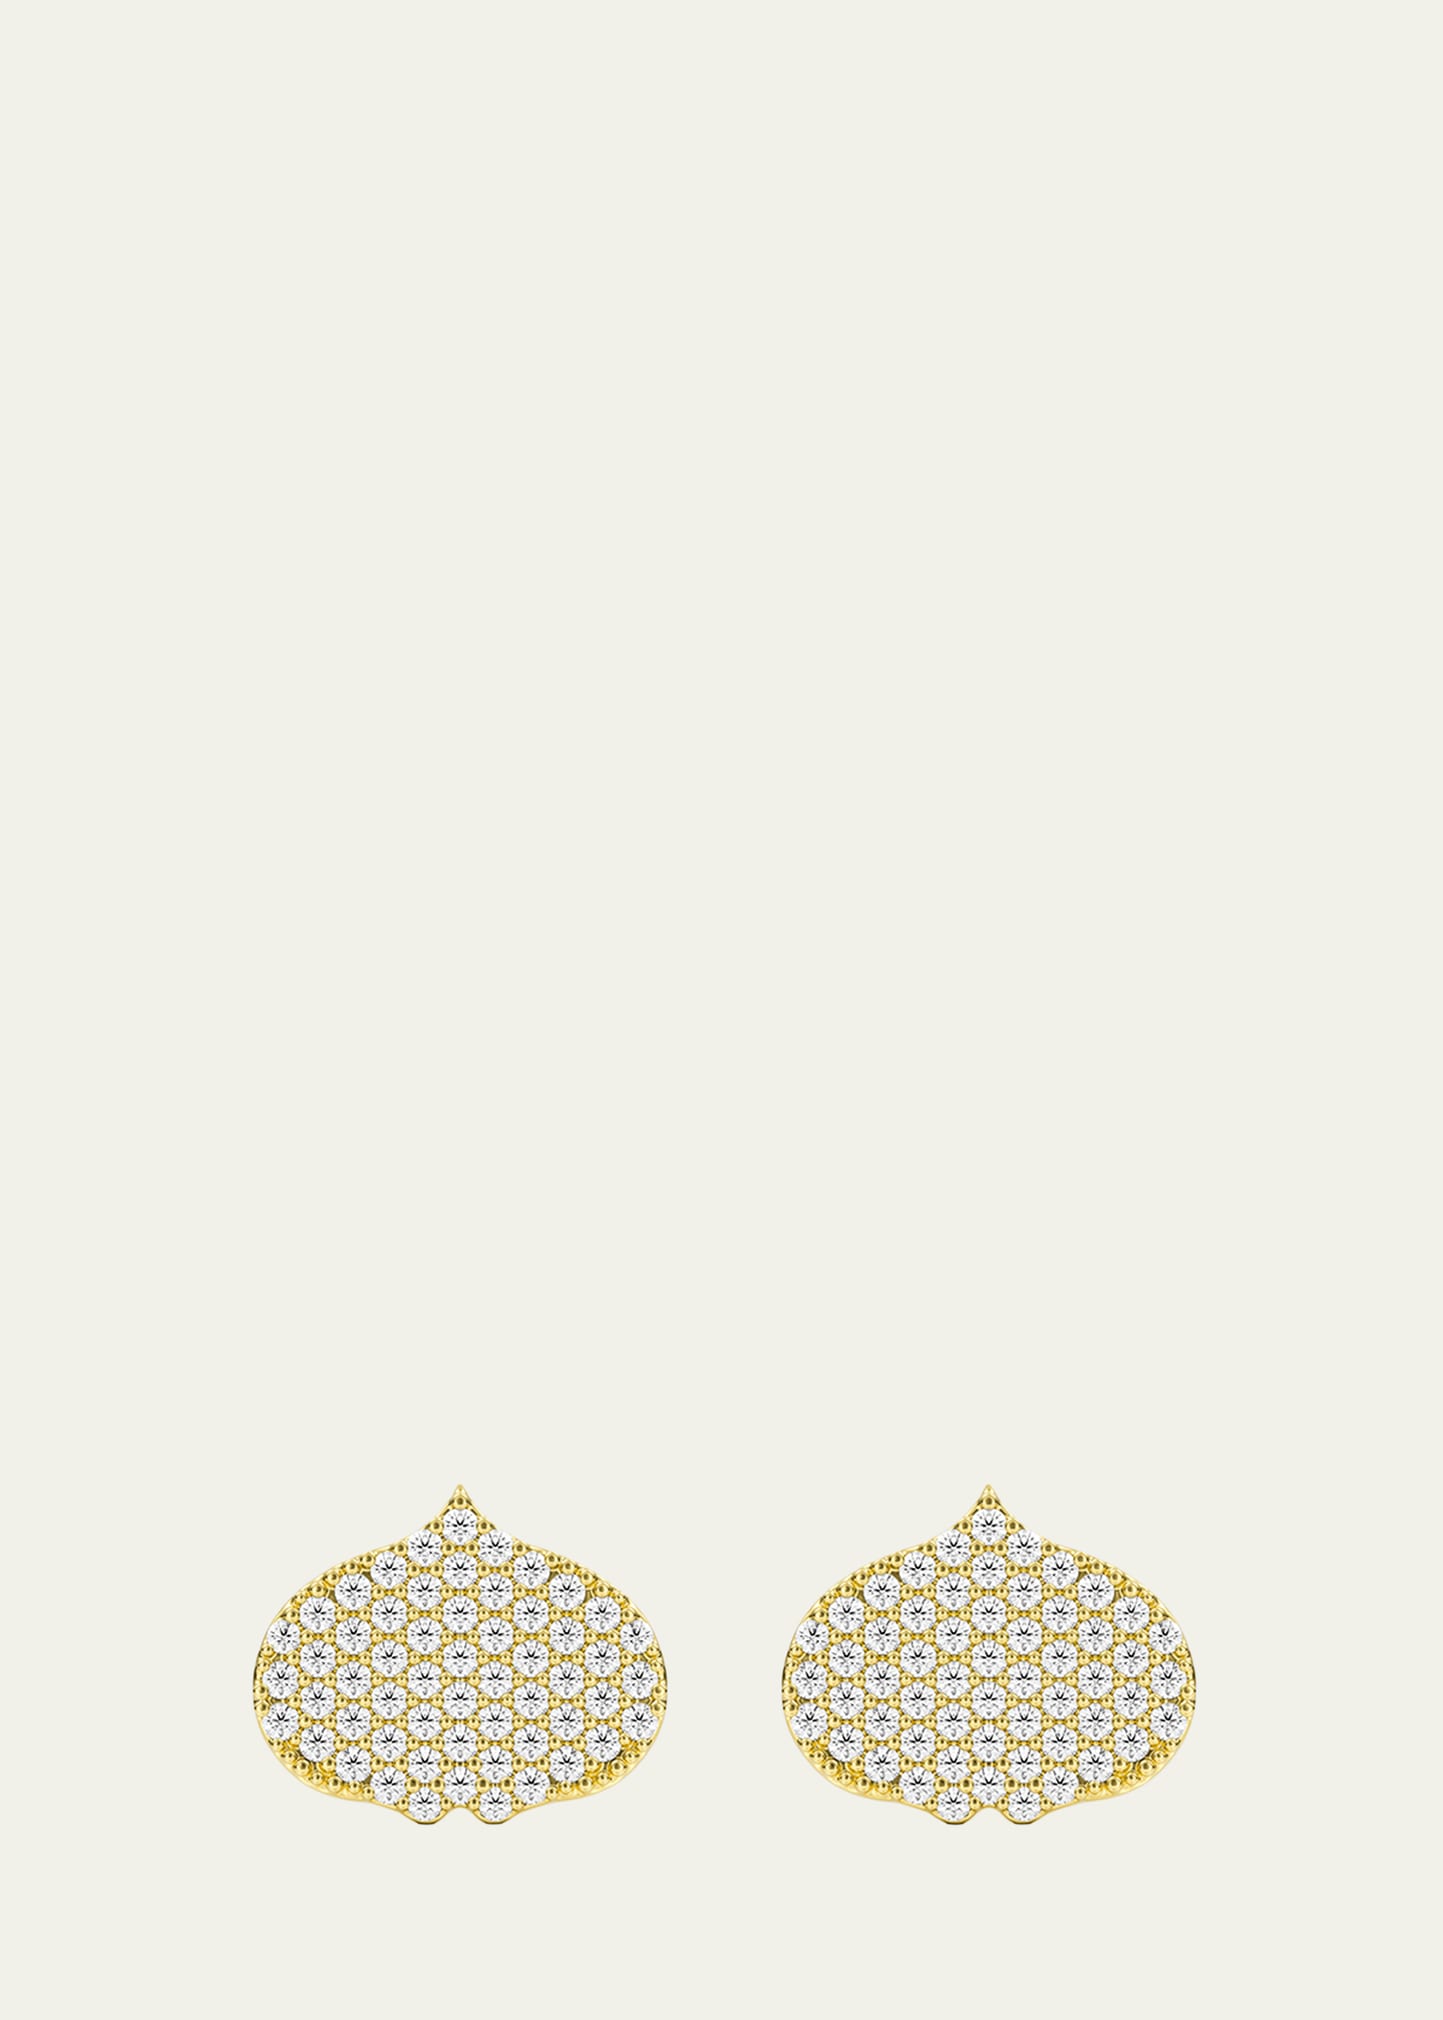 Kamal Eye Adore Stud Earrings In Yellow Gold And White Diamonds, 12mm